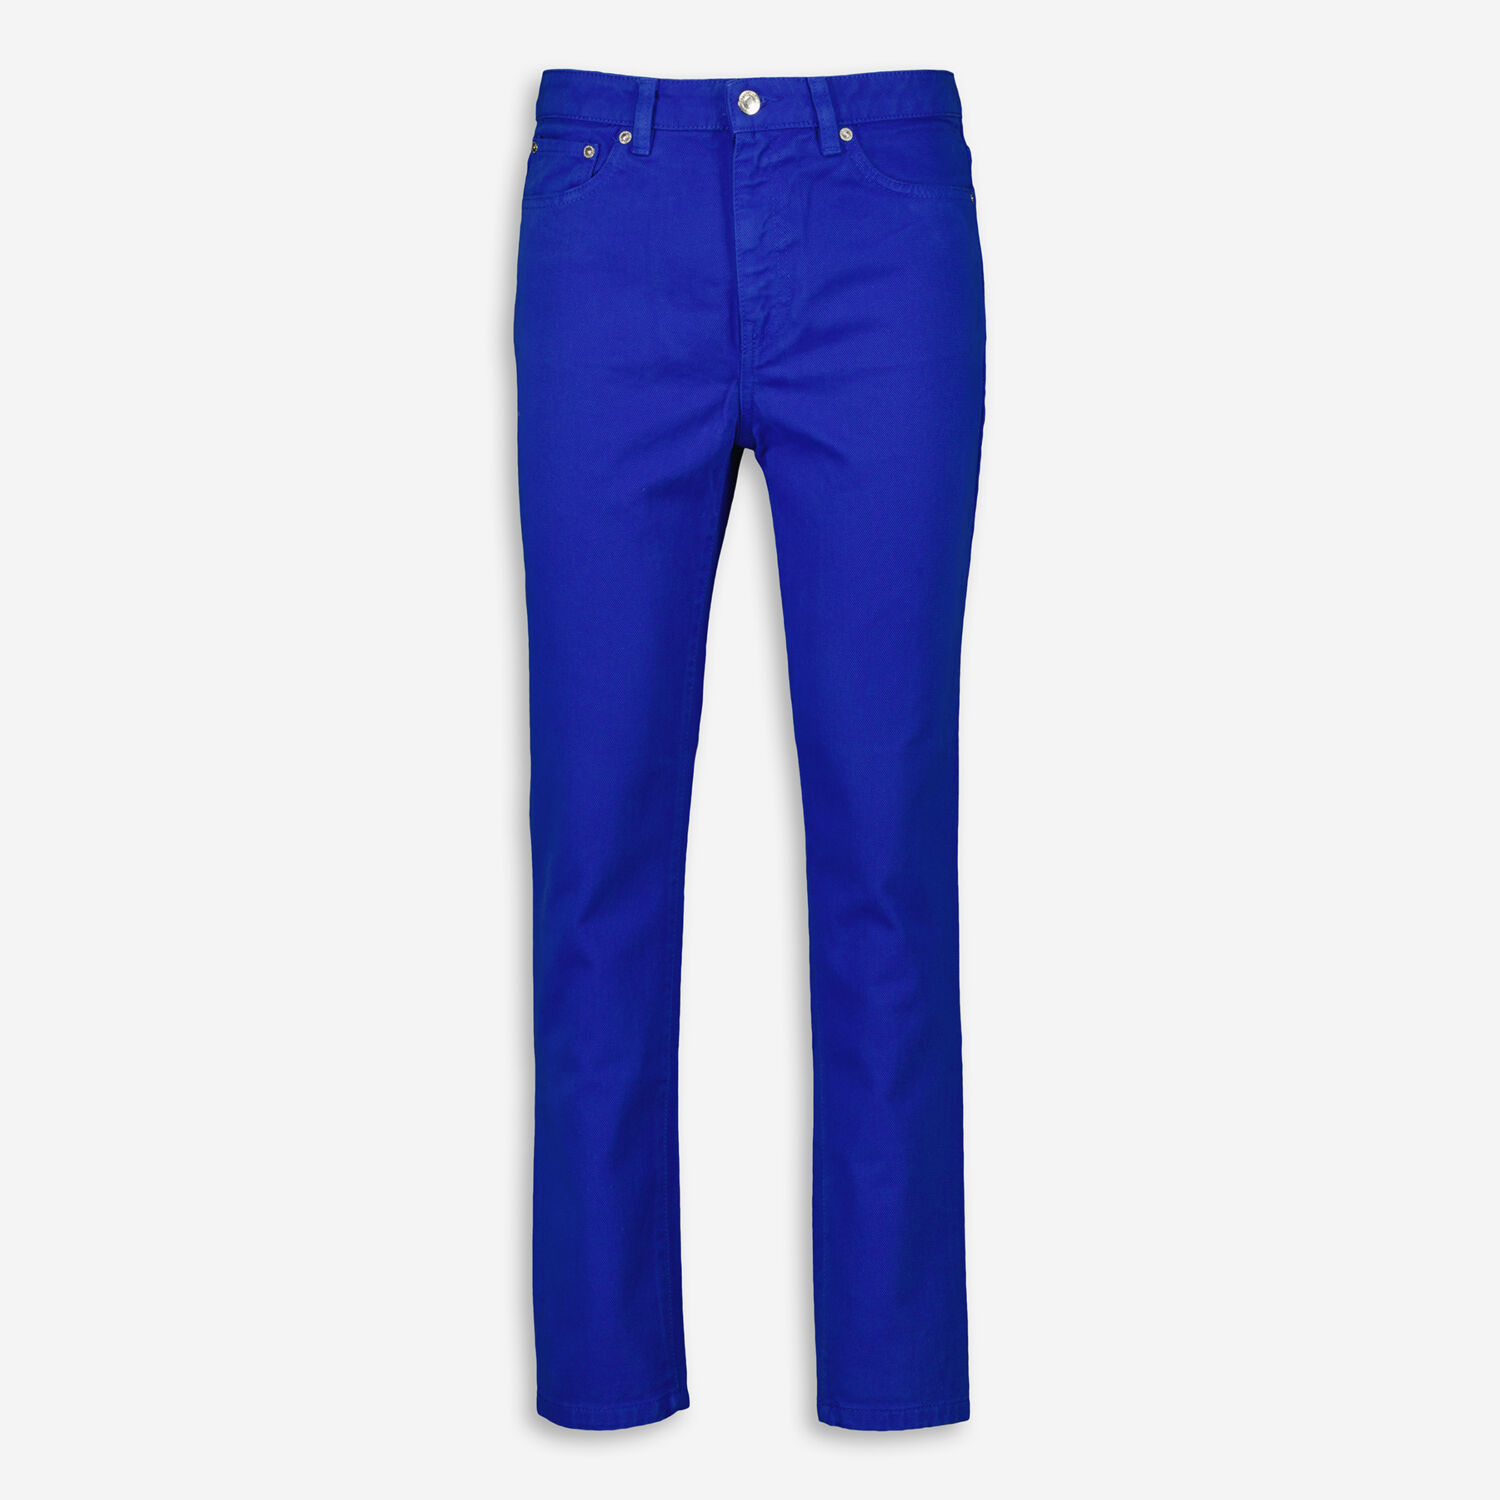 Royal Blue Jeans - TK Maxx UK